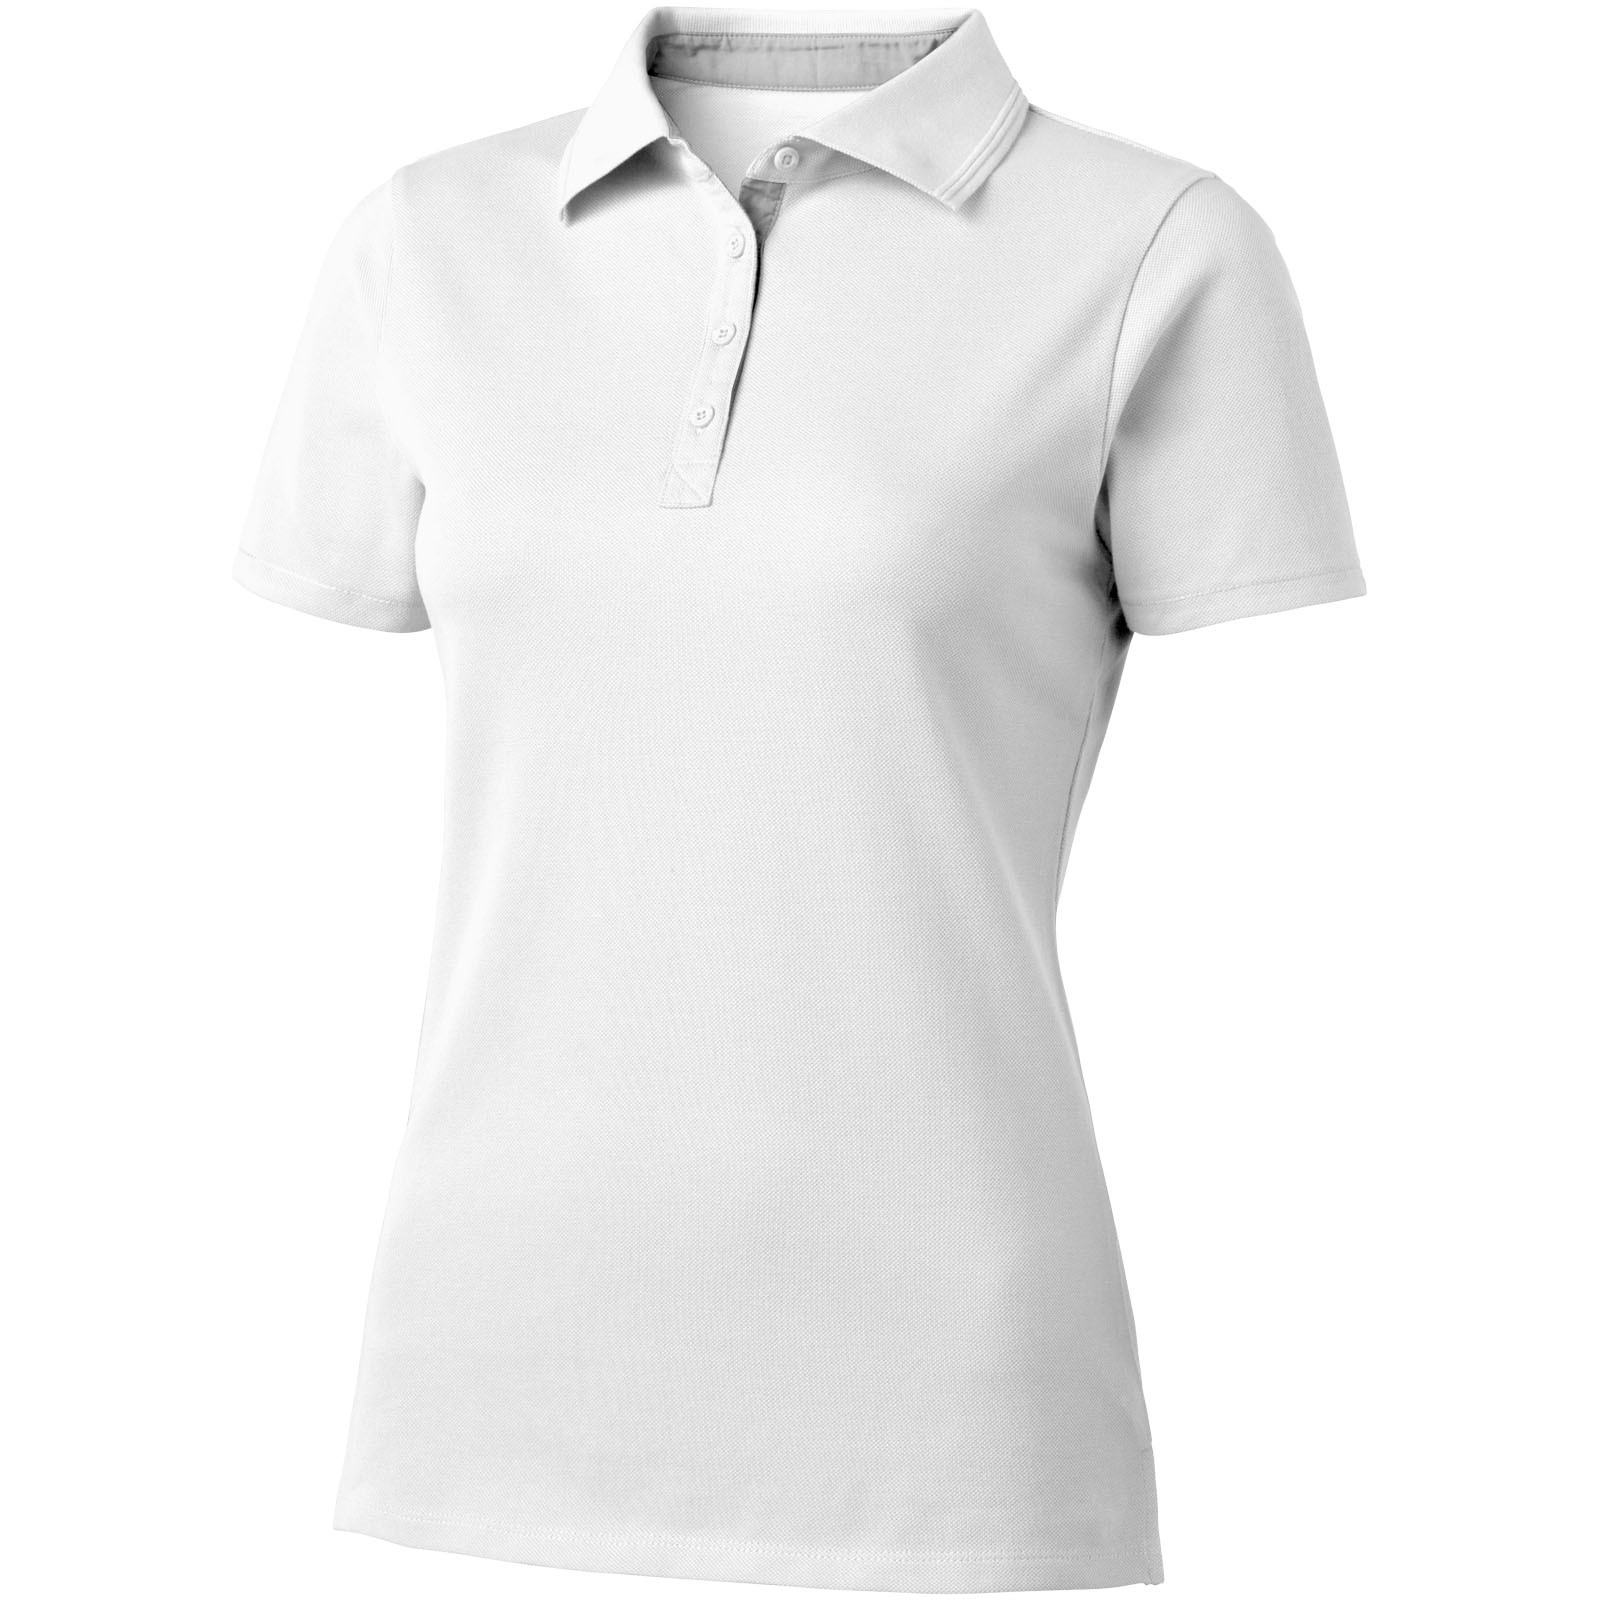 Hacker short sleeve ladies polo - White / Grey / XL